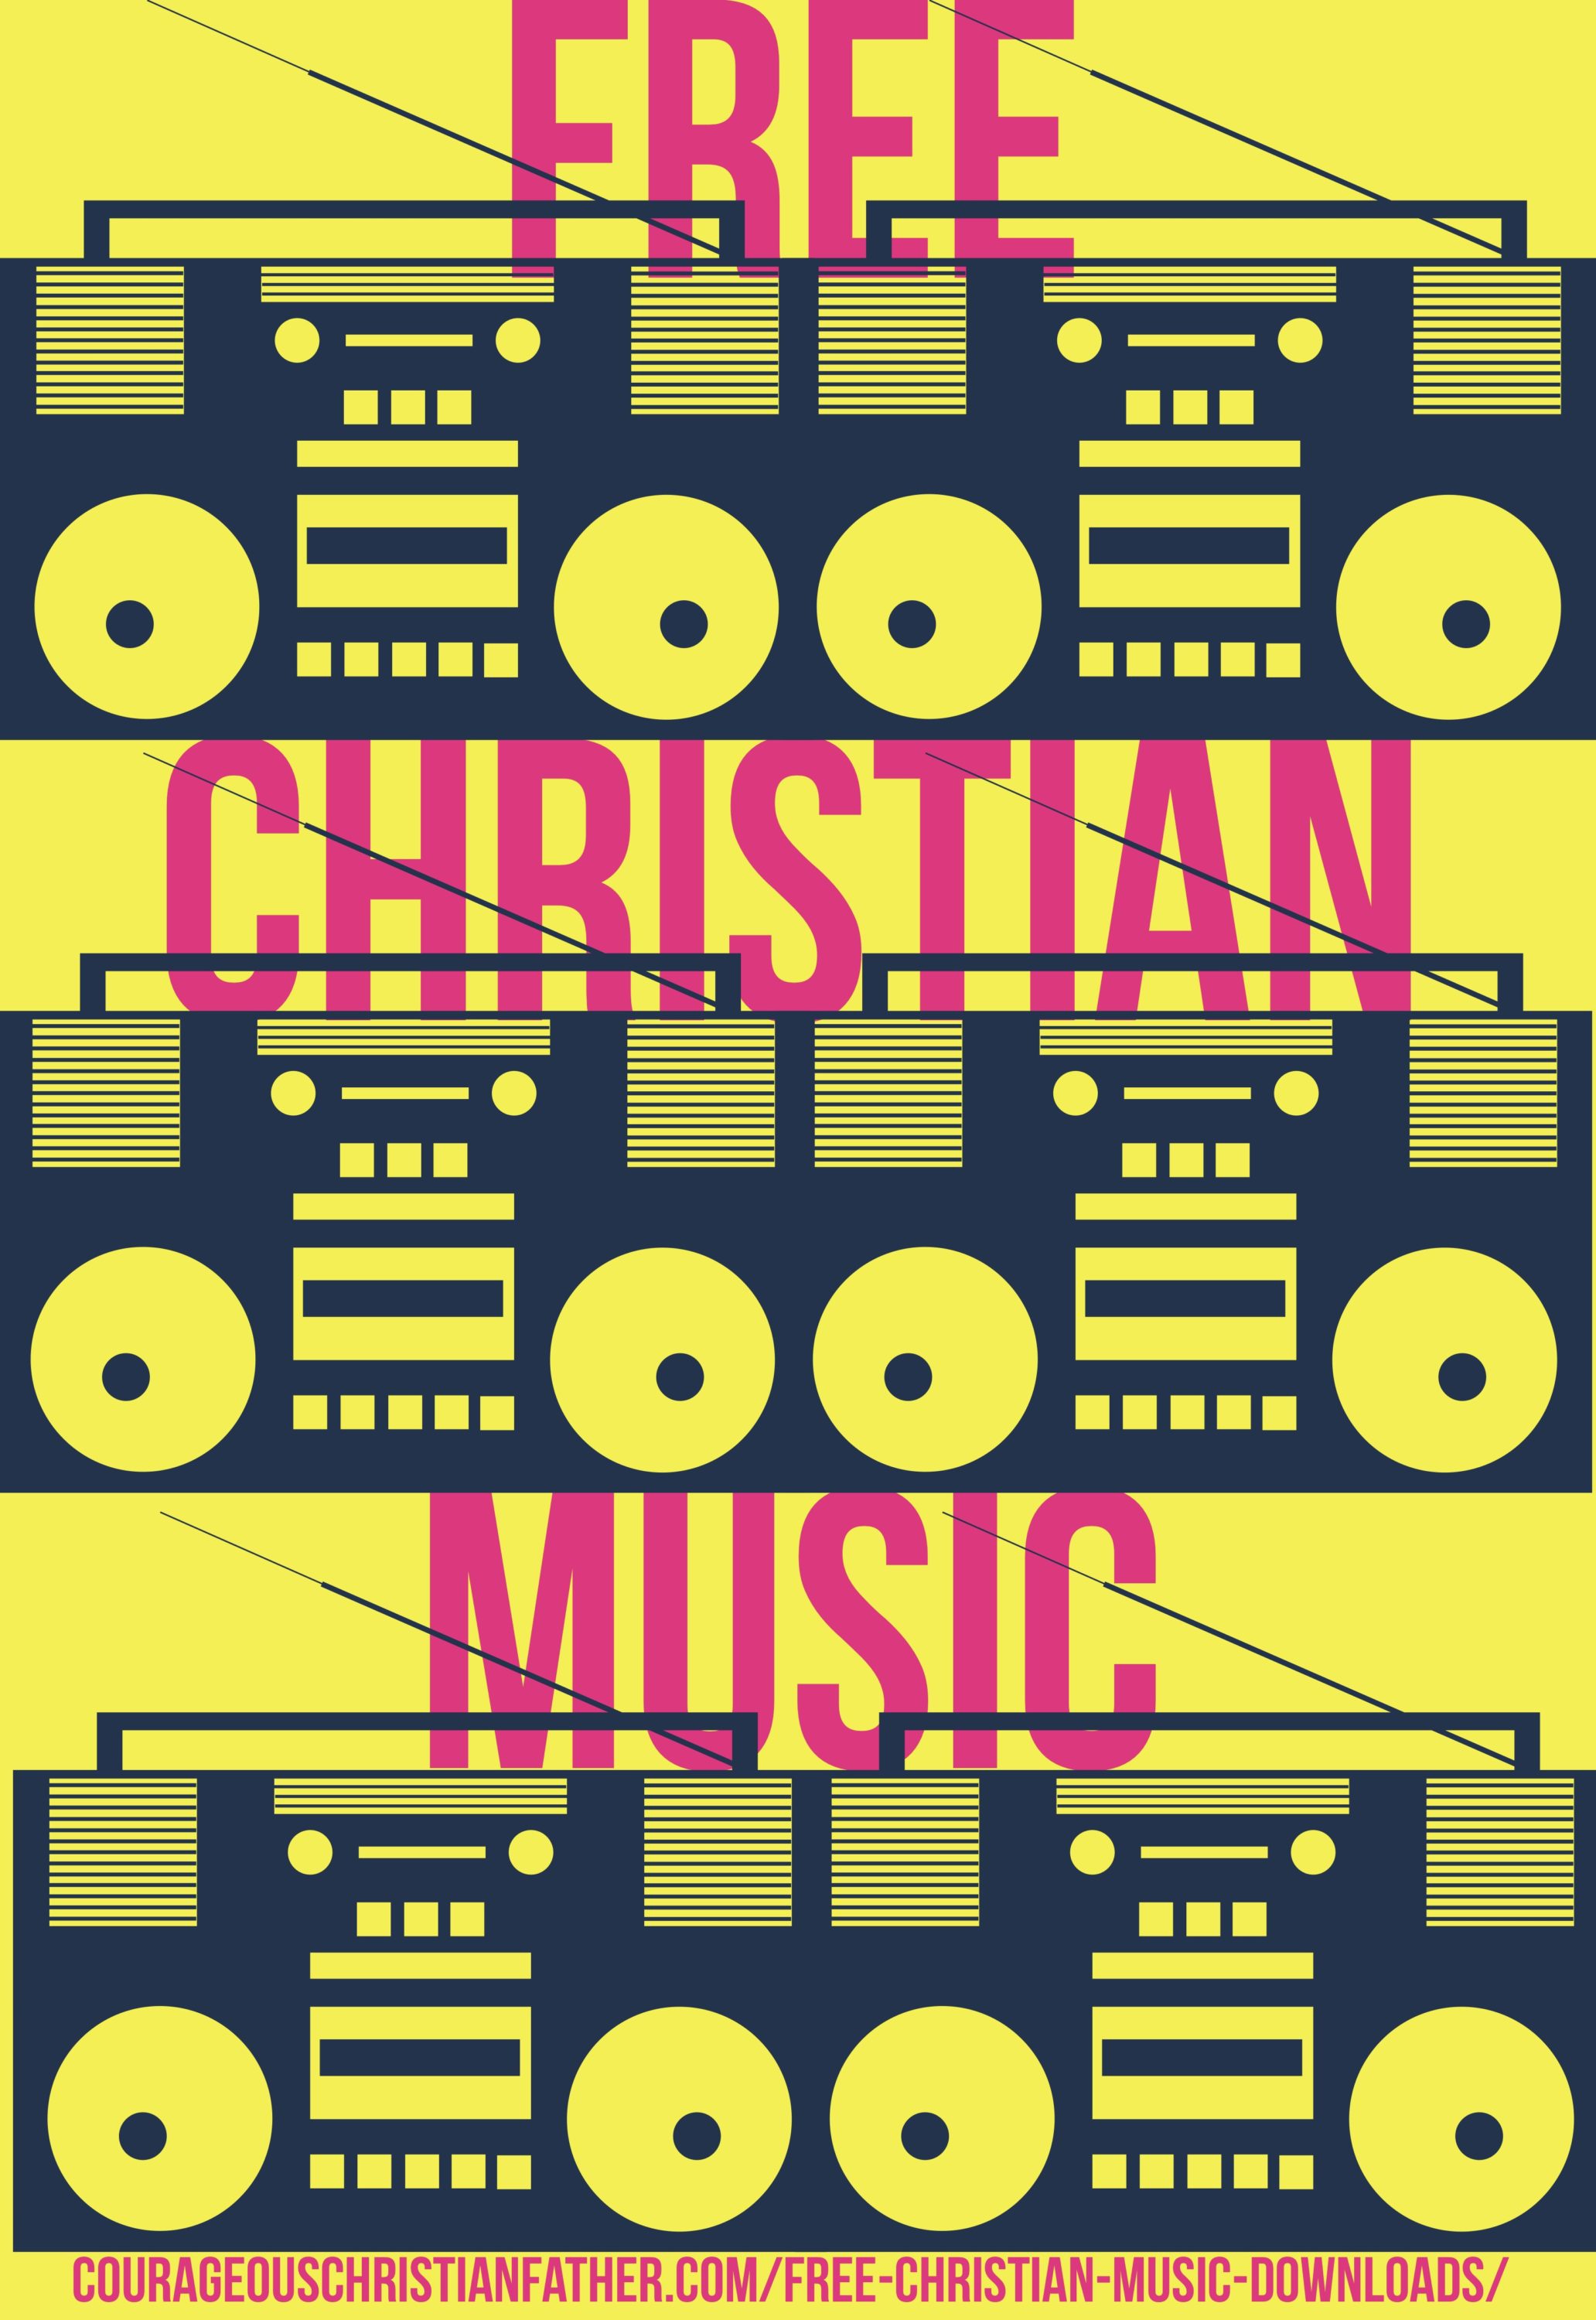 Free Christian Music Downloads